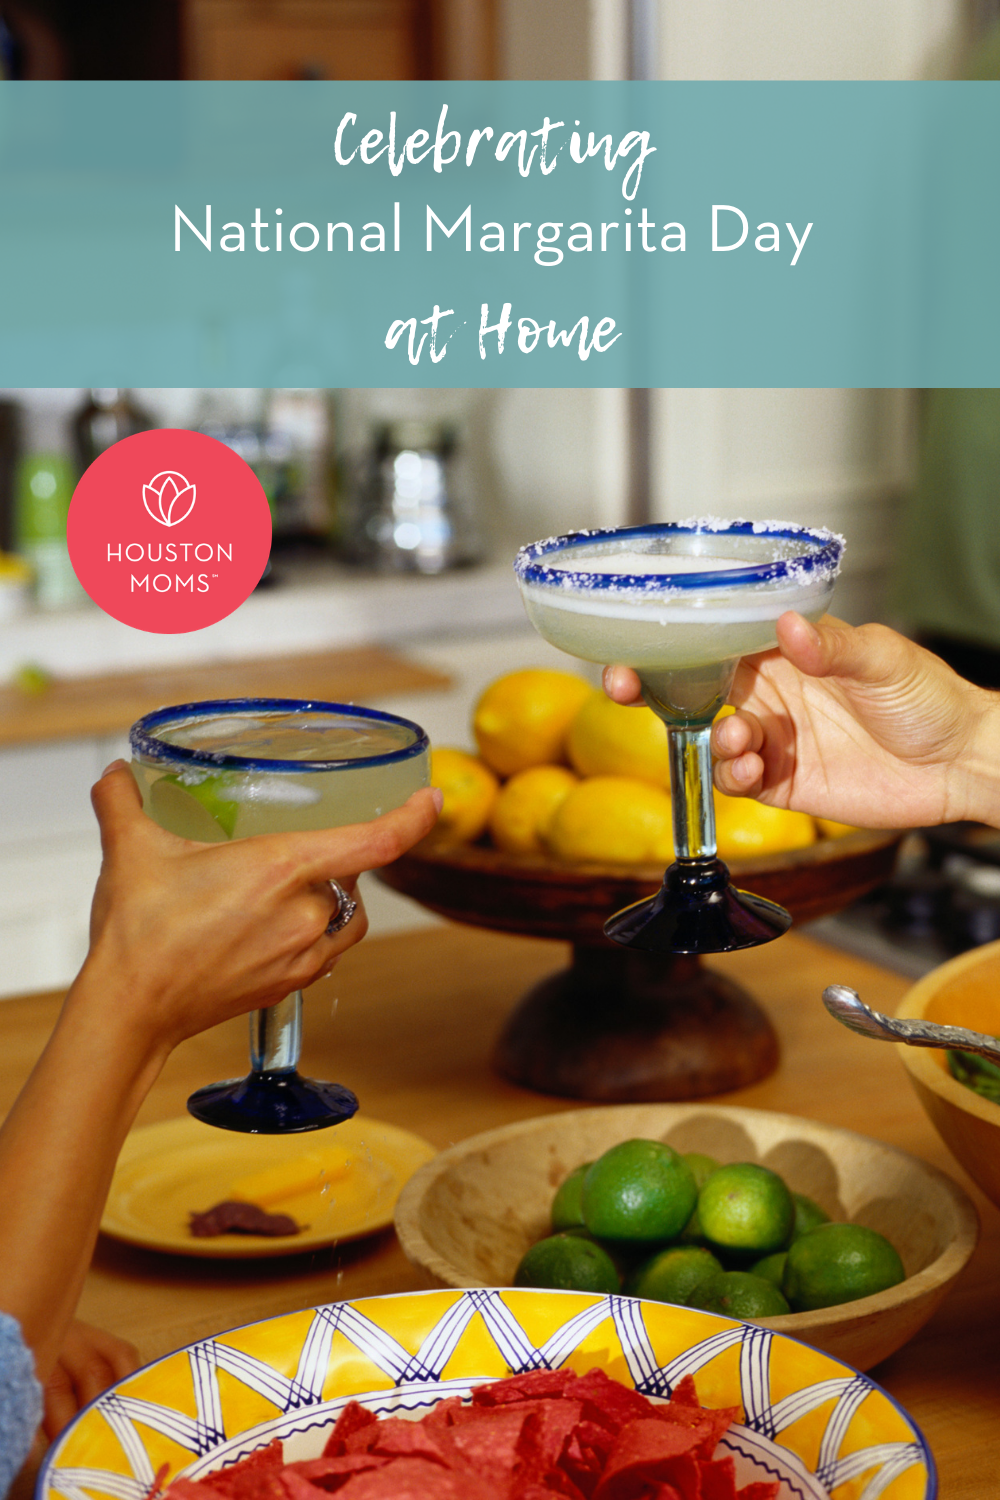 Houston Moms "Celebrating National Margarita Day at Home" #houstonmoms #momsaroundhouston